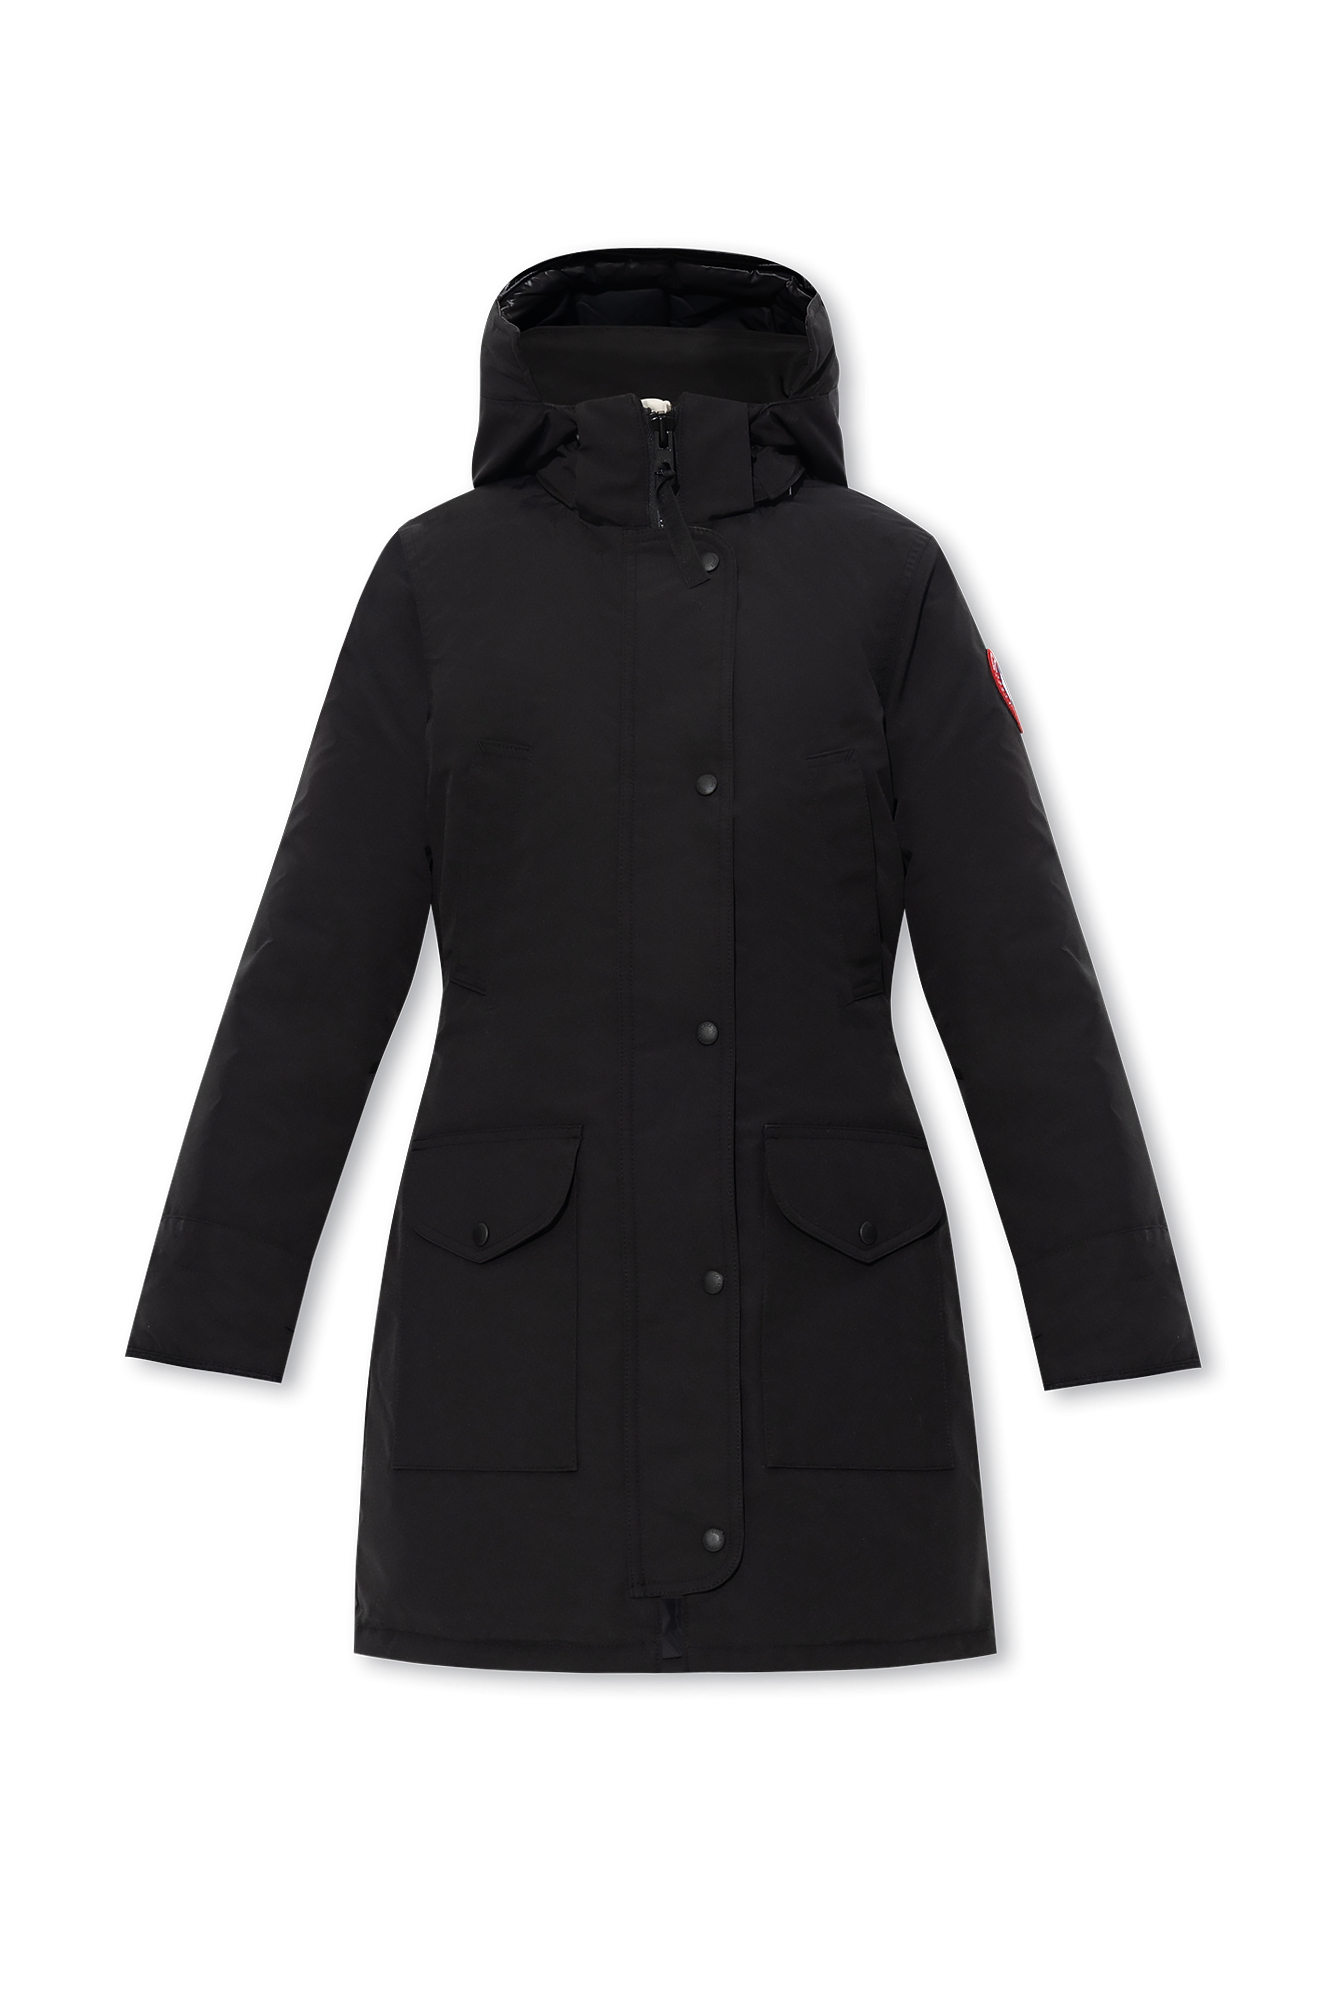 Black 'Trillium' hooded down jacket Canada Goose - Vitkac Canada